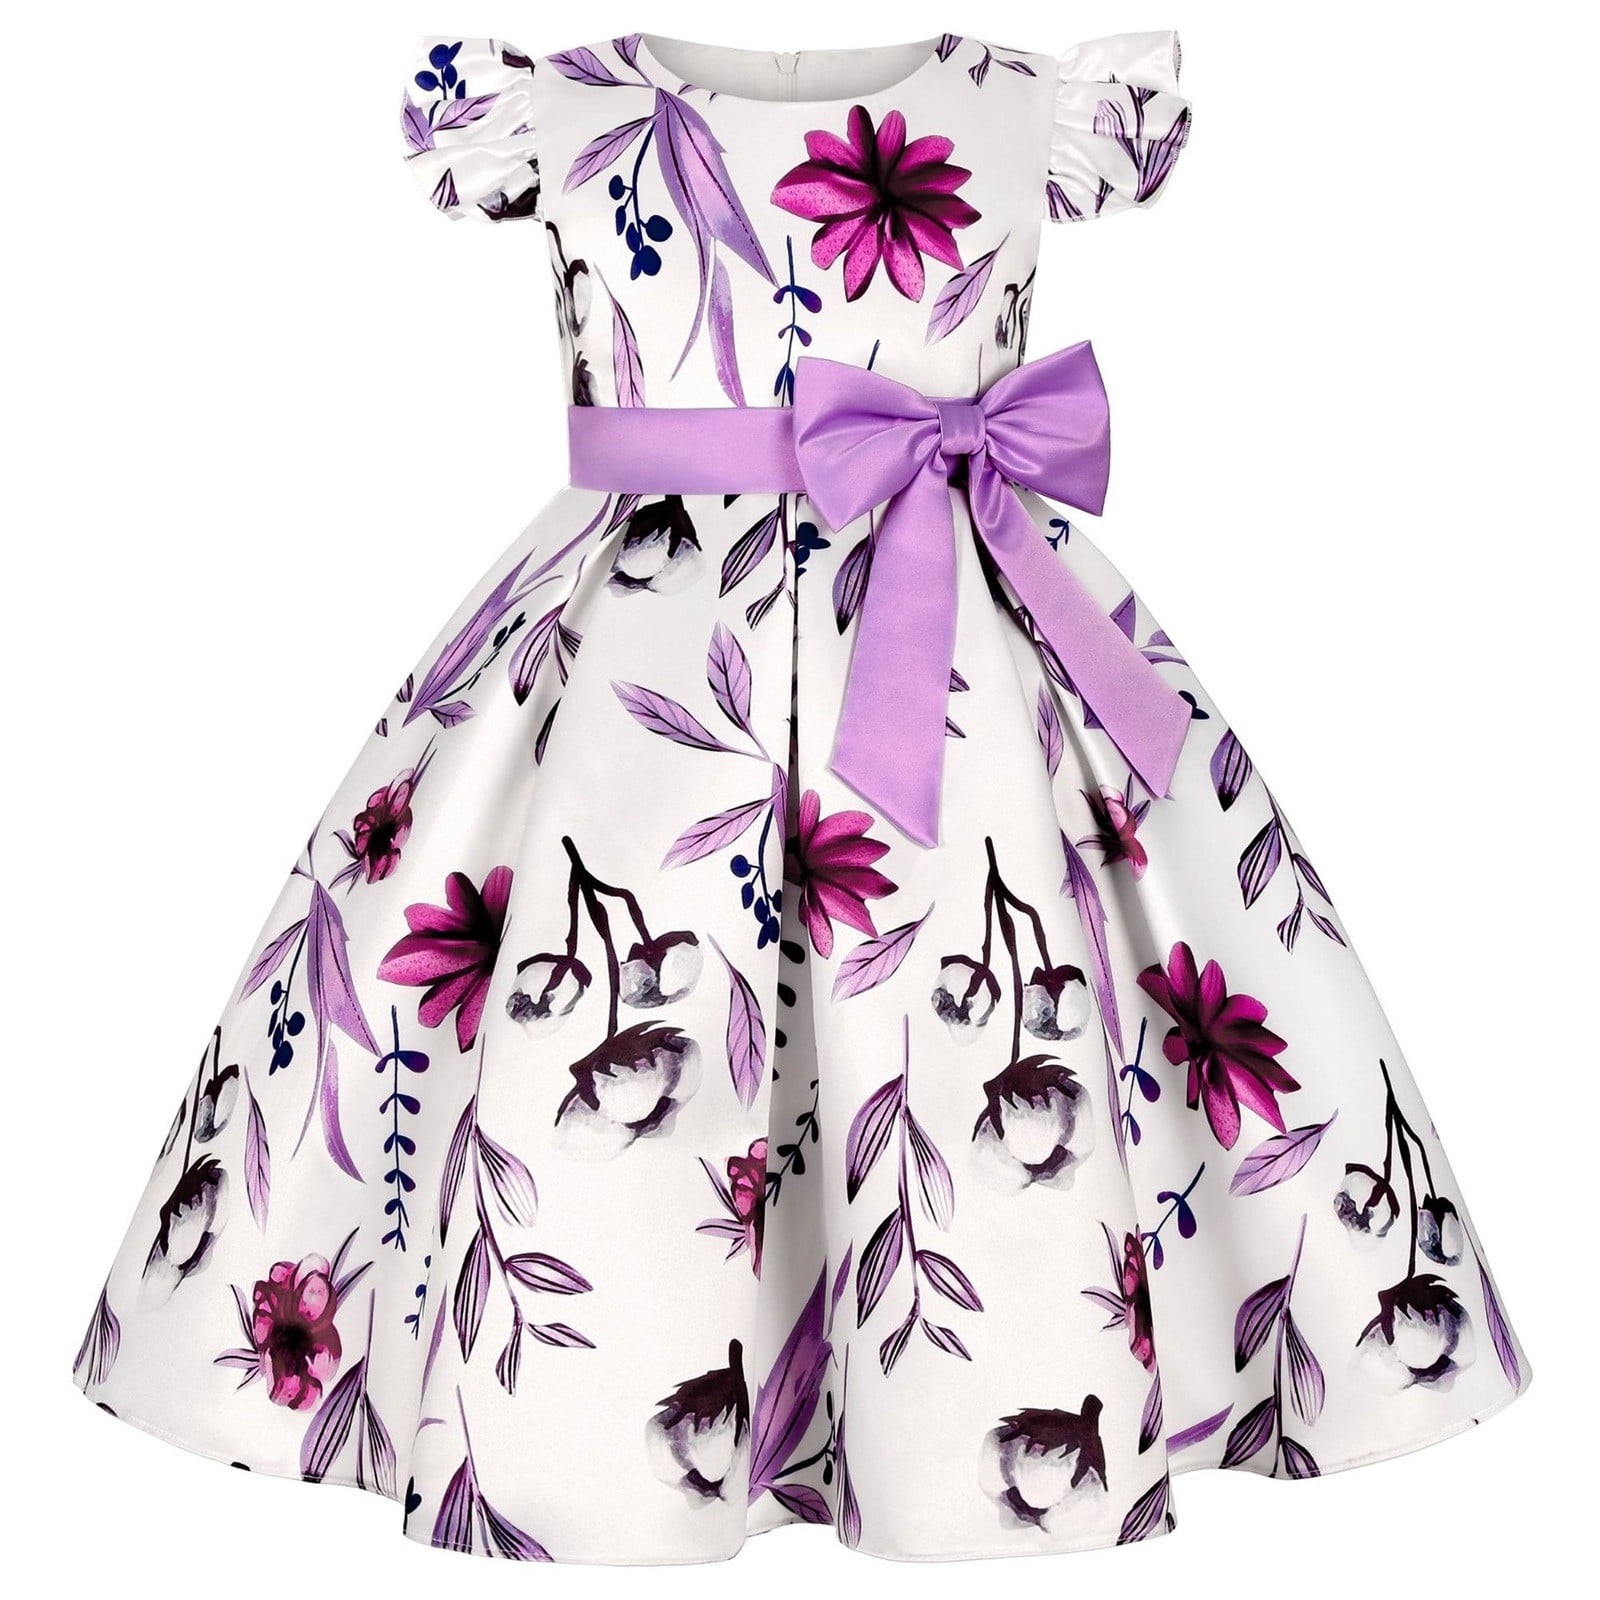 short purple dresses for teenagers